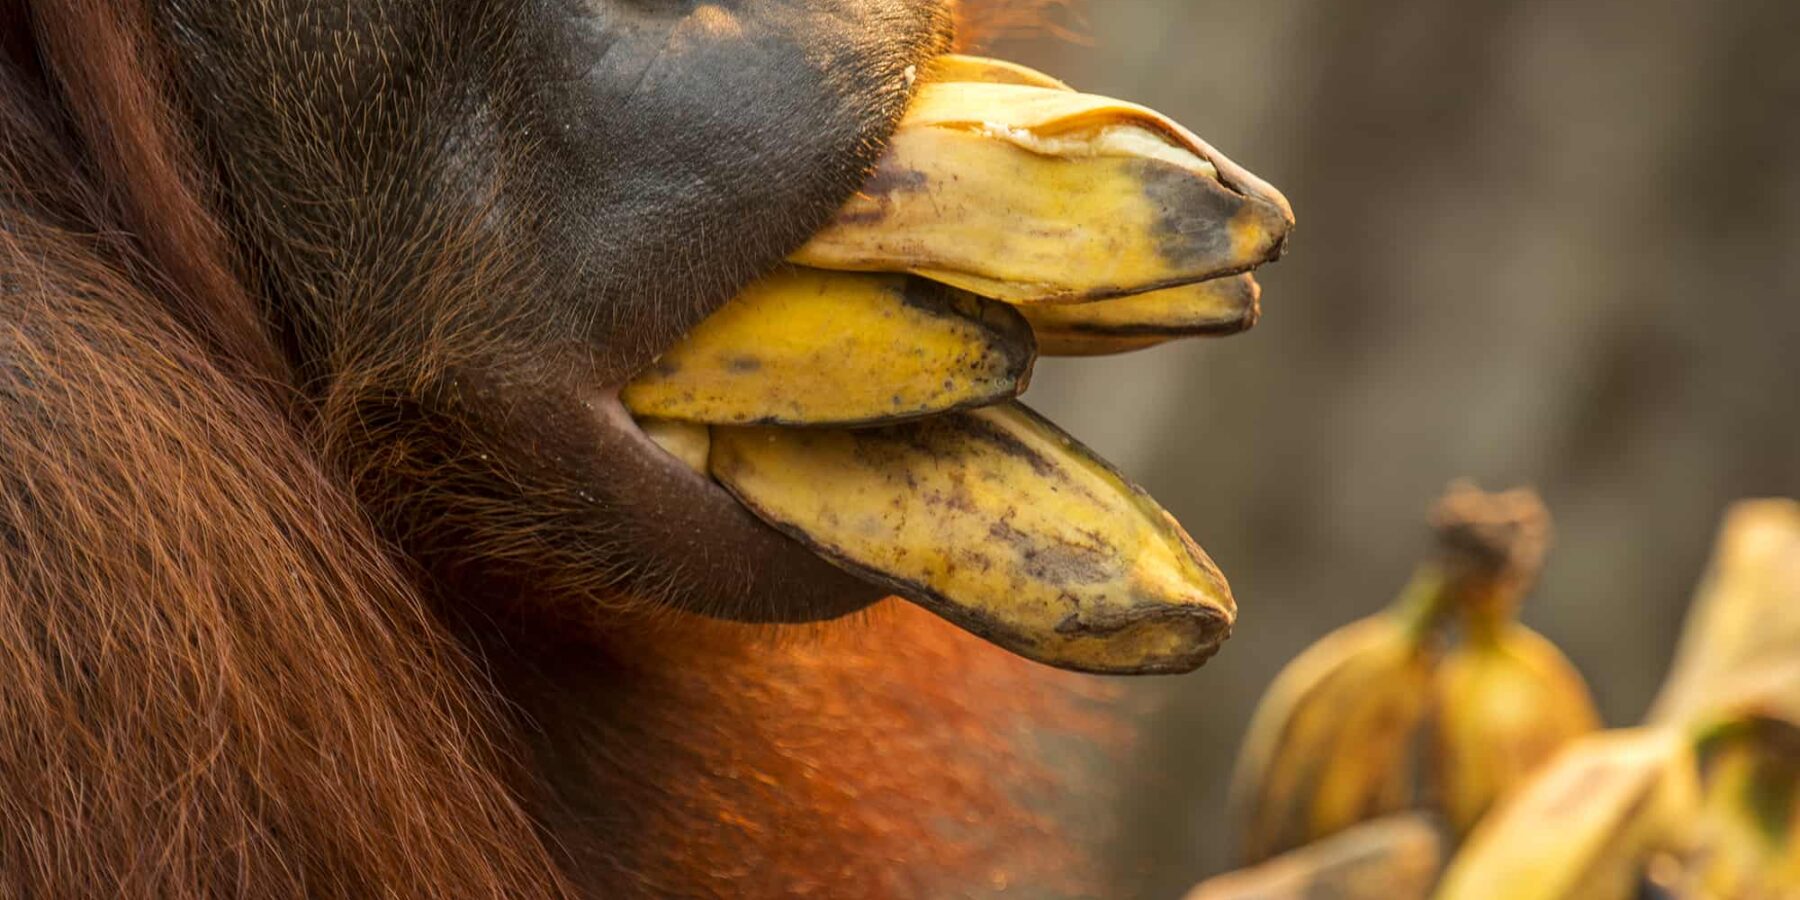 Mouth of orangutan eating bananas in Borneo